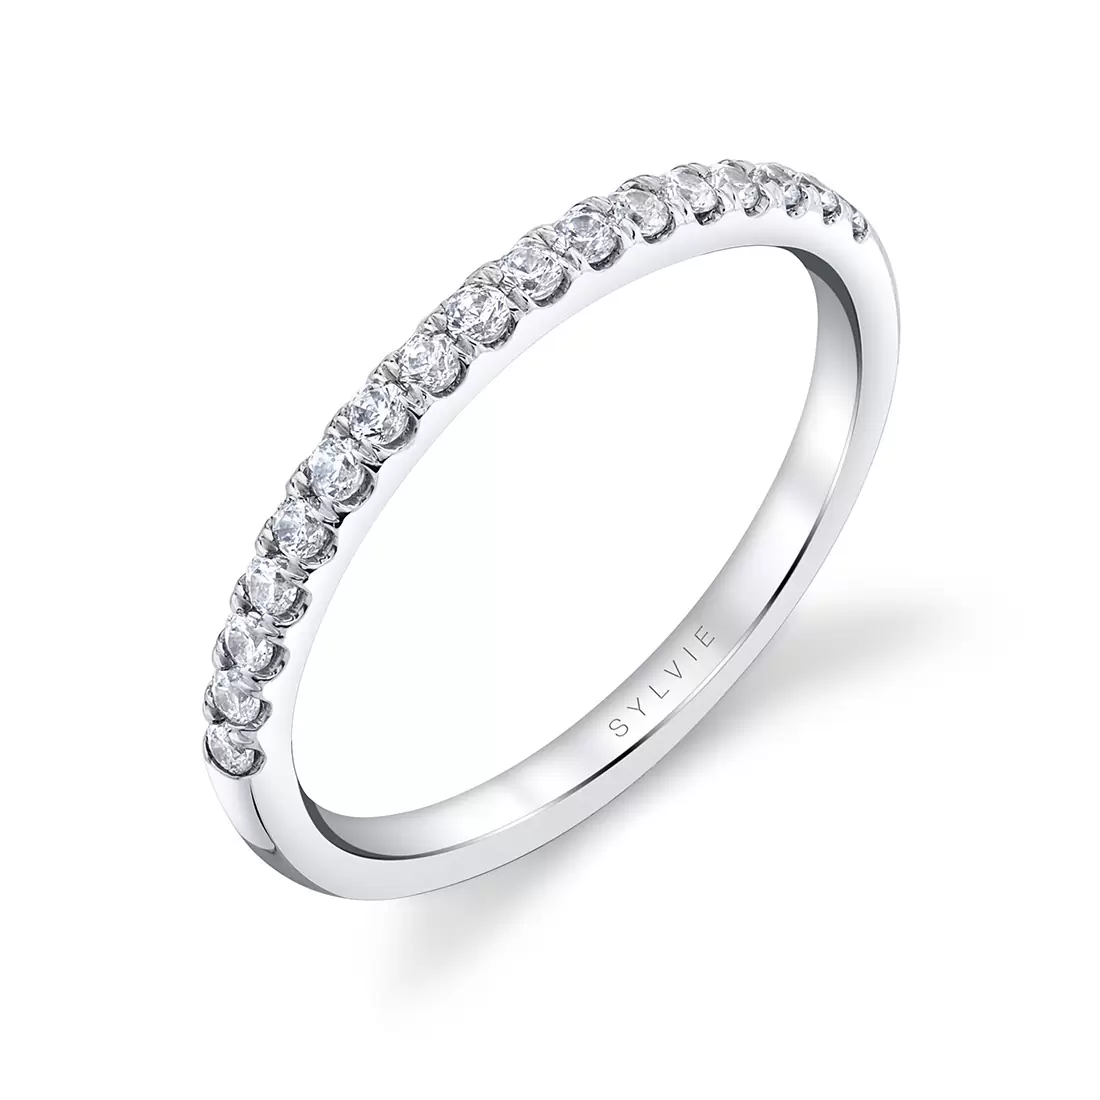 White gold diamond classic wedding ring